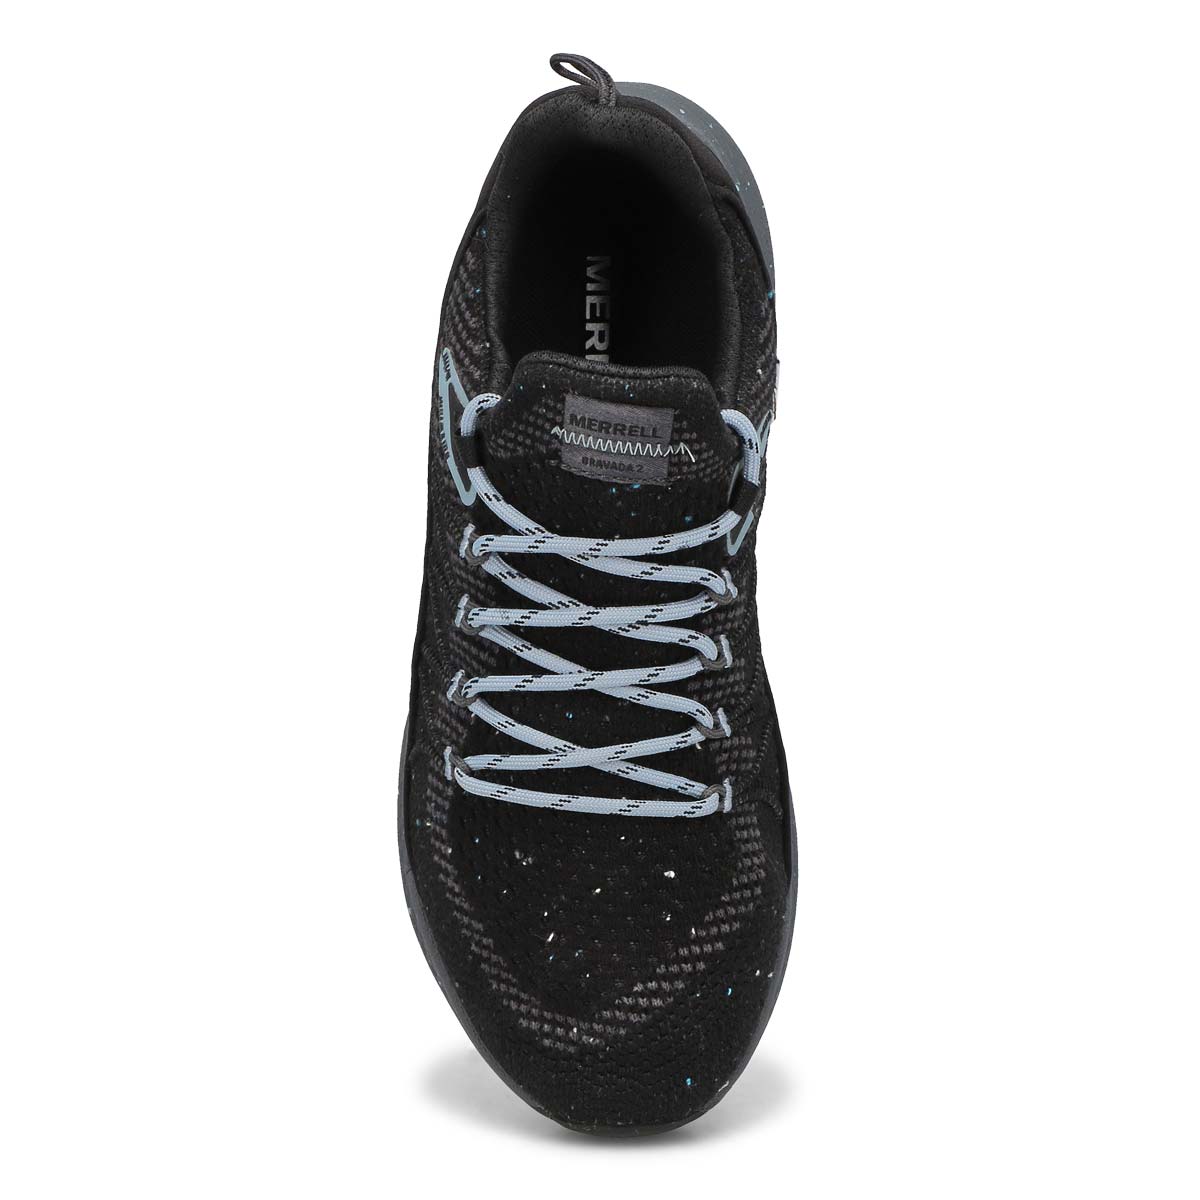 Merrell Bravada Mid J002506 Gray White Hiking Shoes Boots Women's Sz 10.5